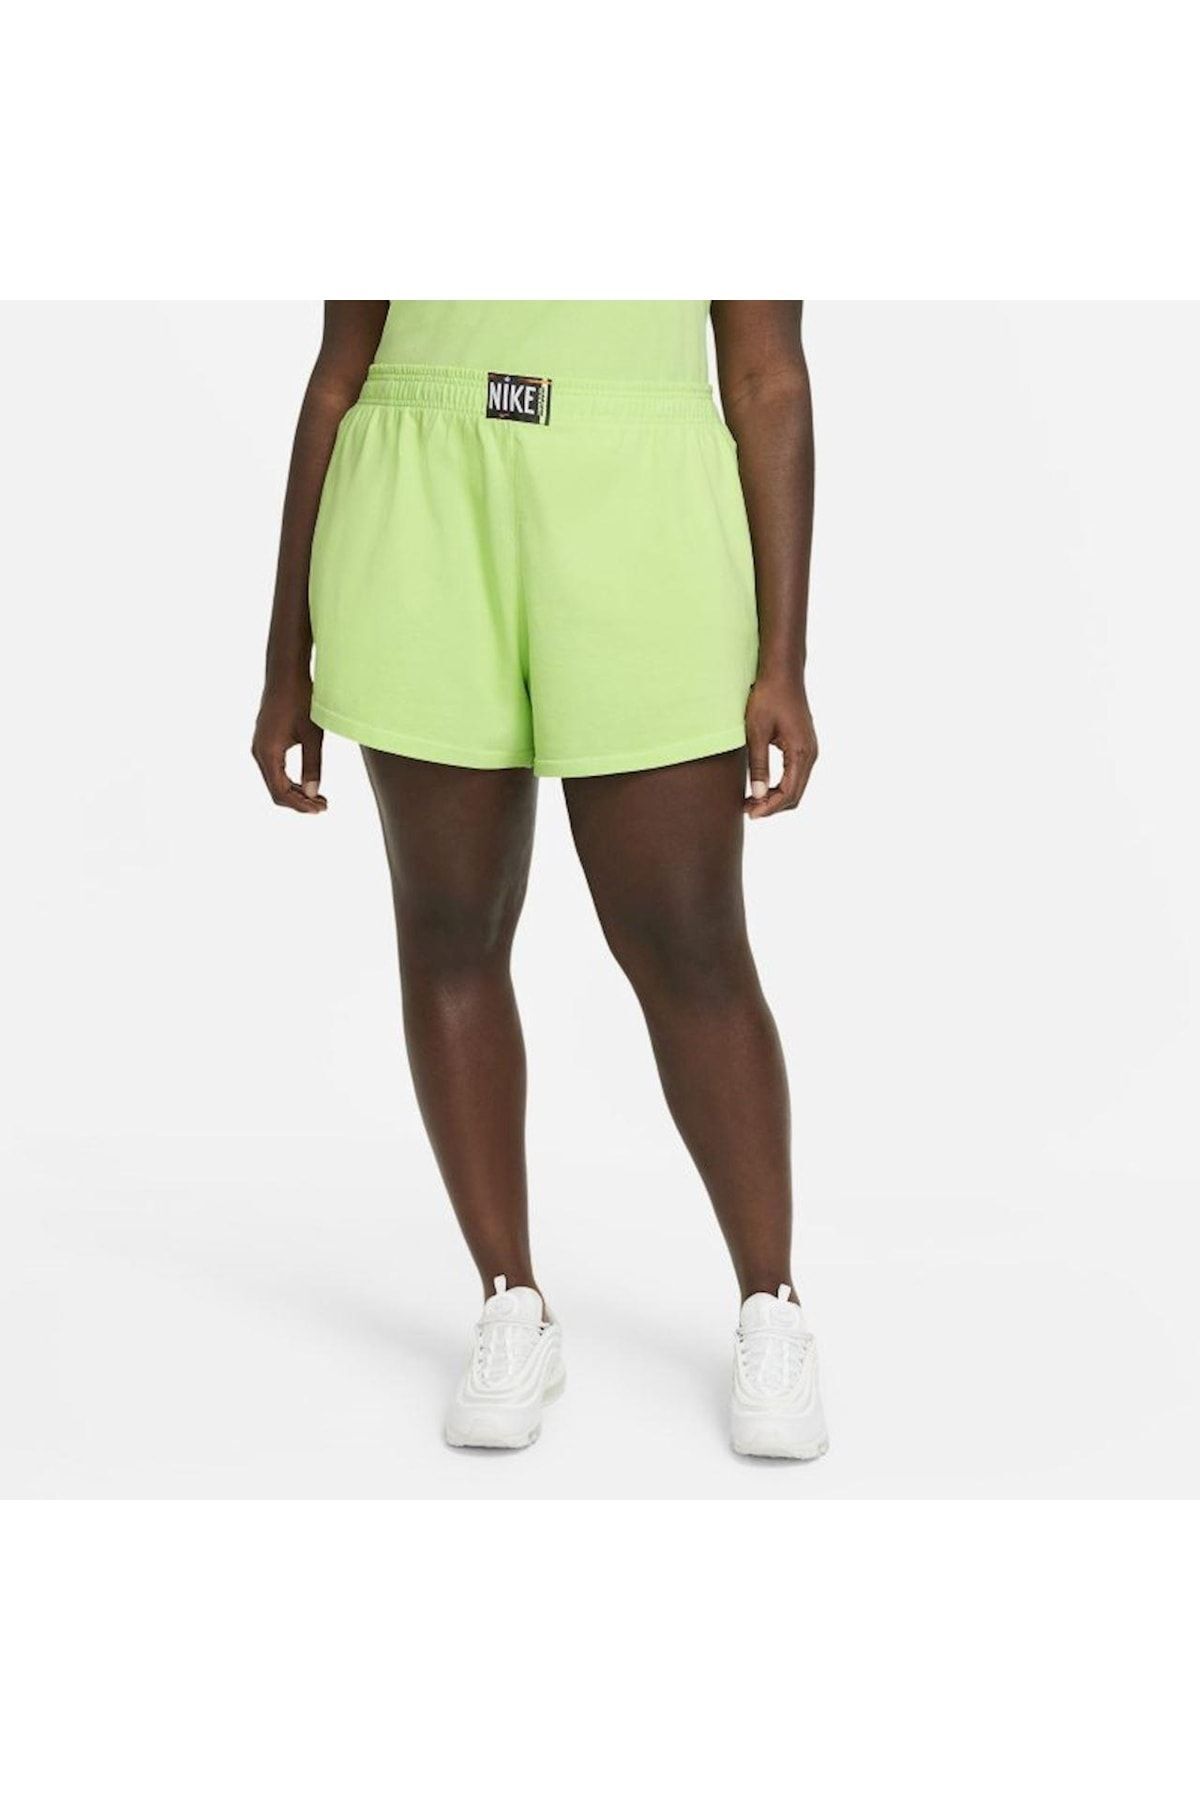 Nike Sportswear Women's Washed Shorts Kadın Spor Şort- Yeşil Dh3033-358